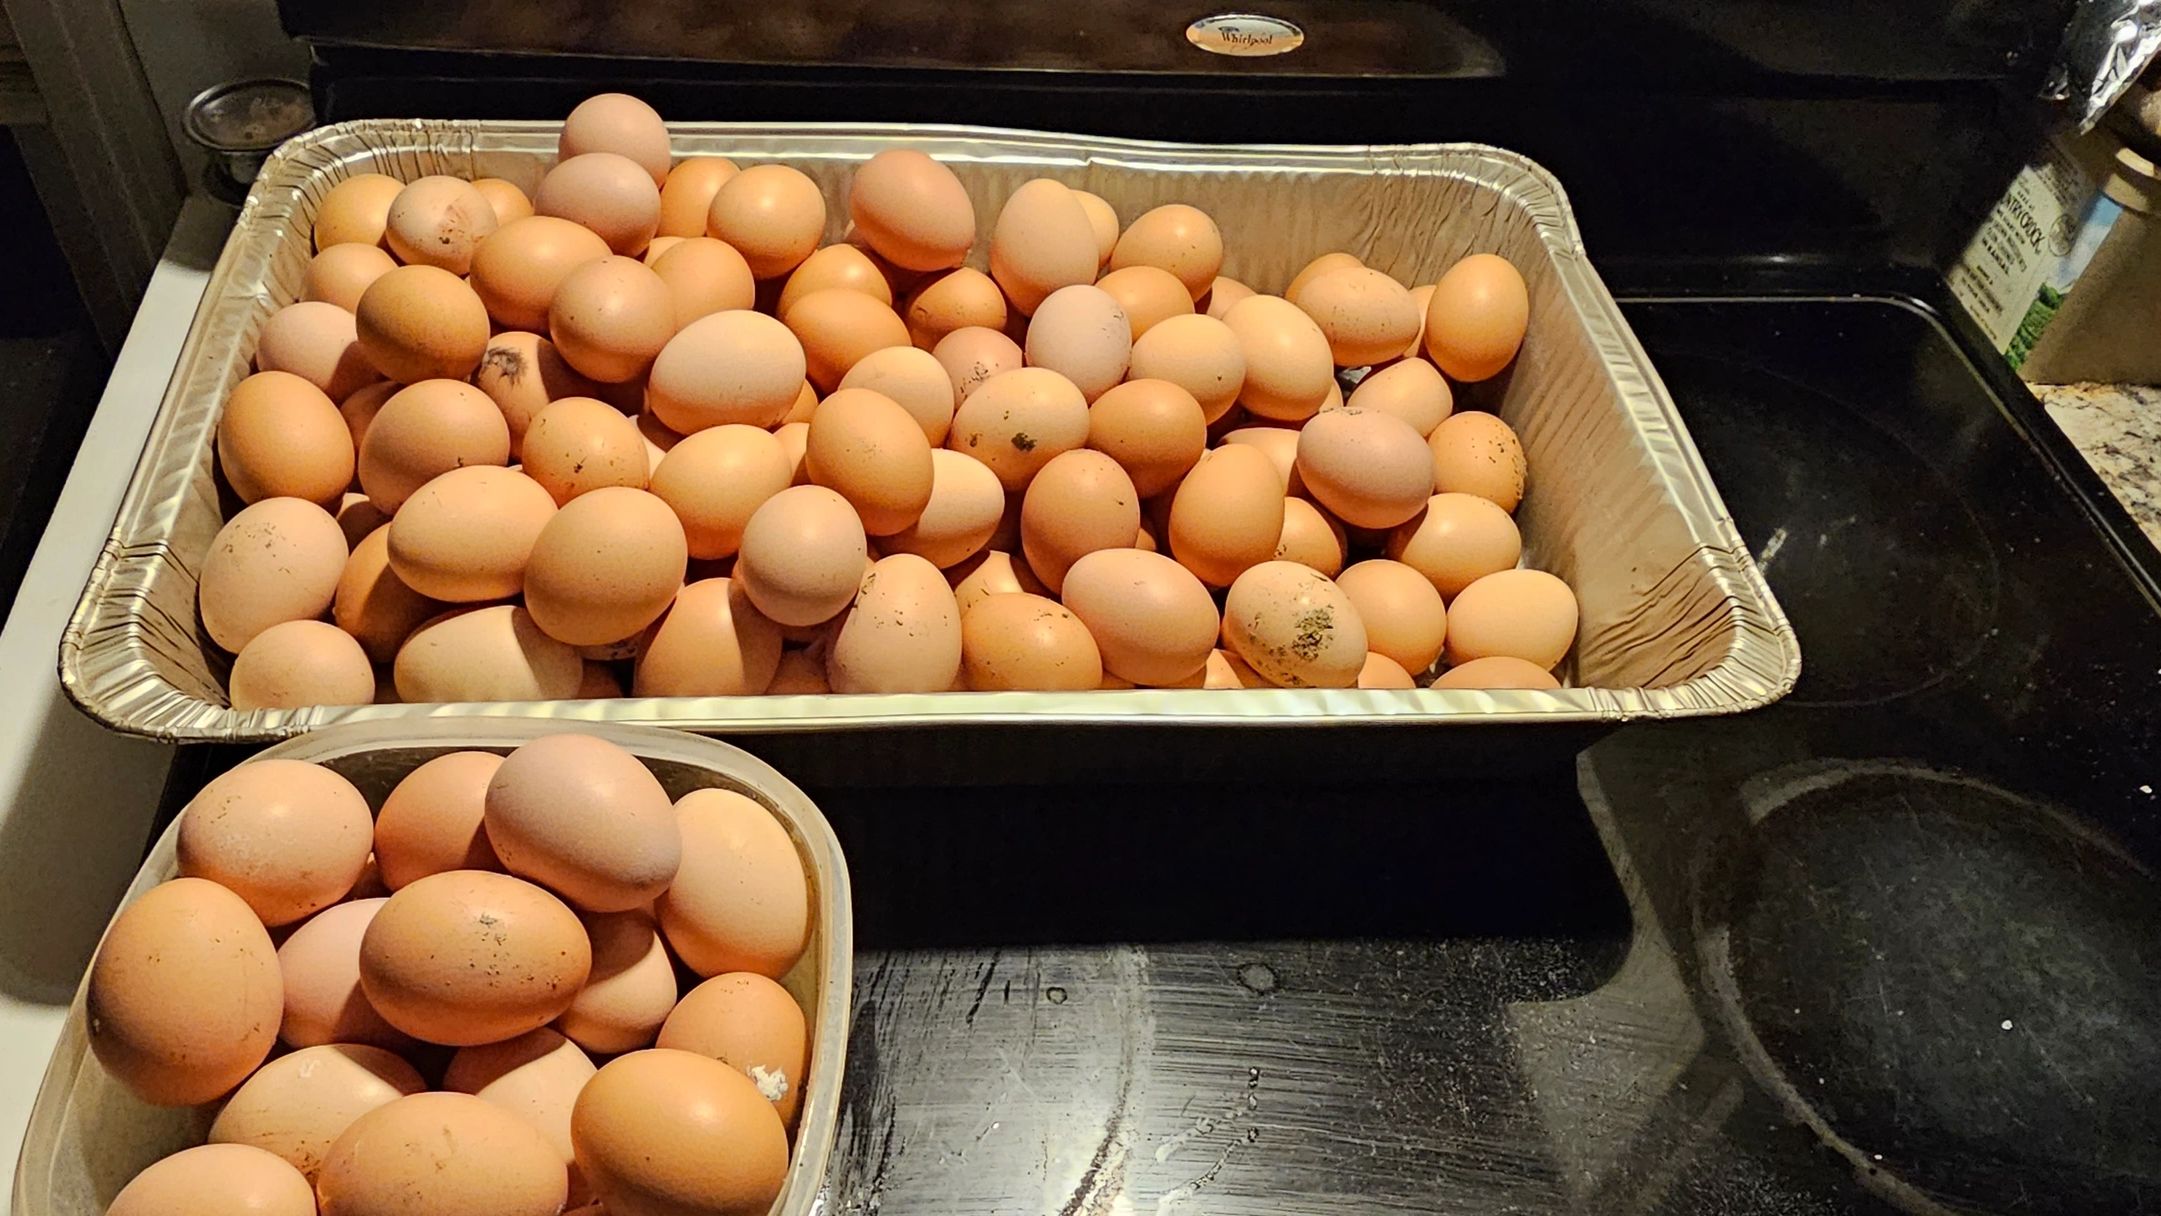 Farm fresh eggs soy free, non GMO come taste the difference